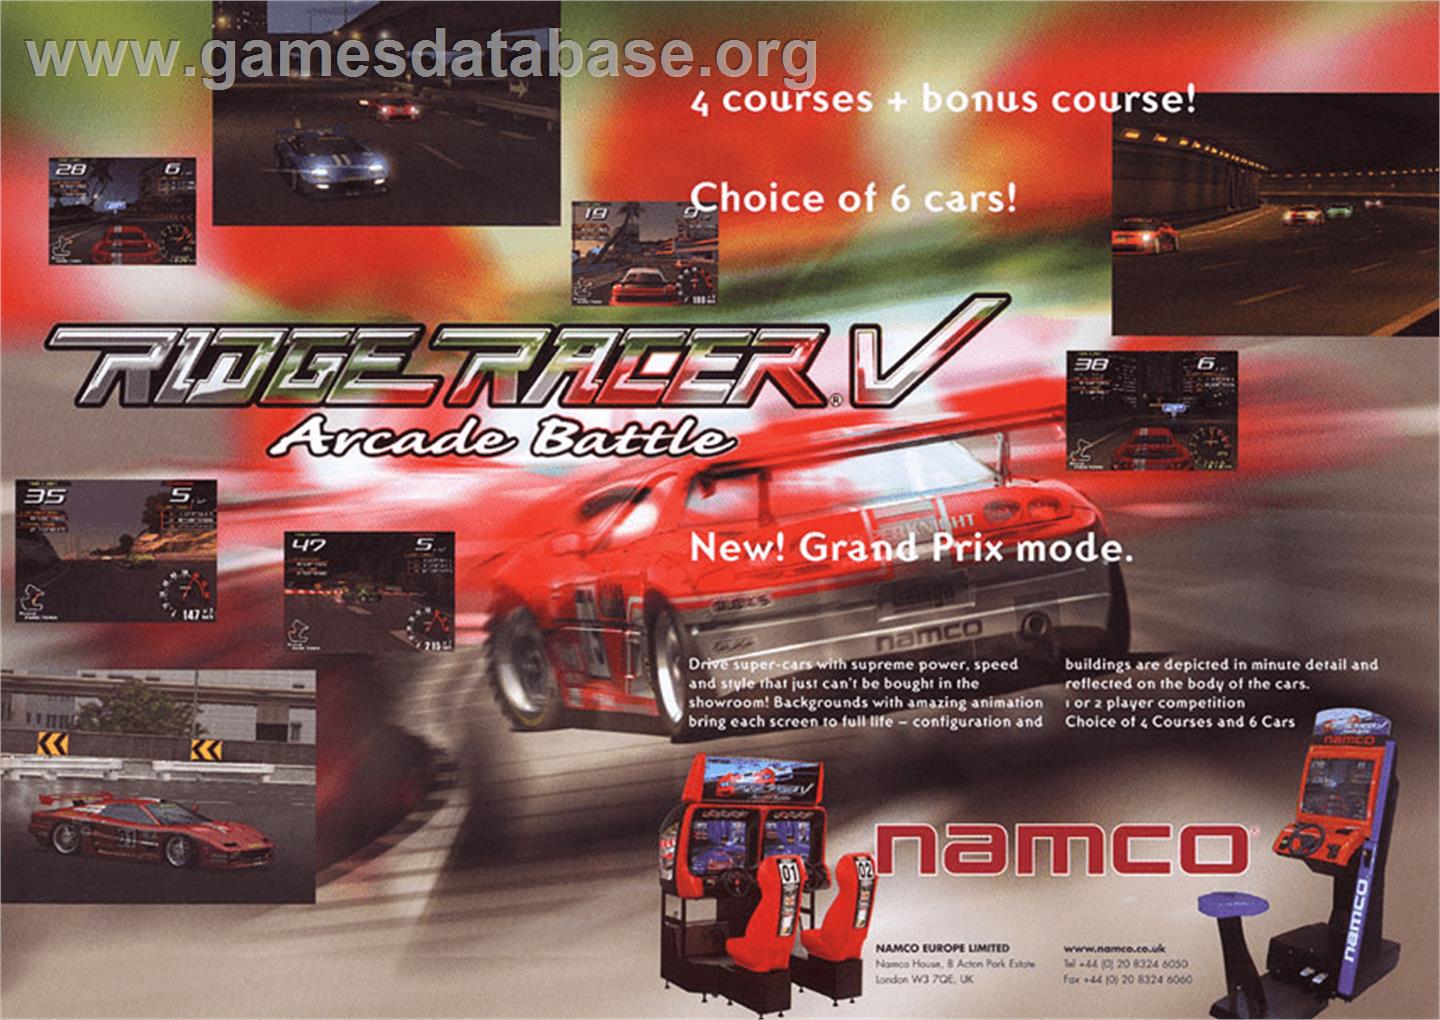 Ridge Racer V Arcade Battle - Arcade - Artwork - Advert